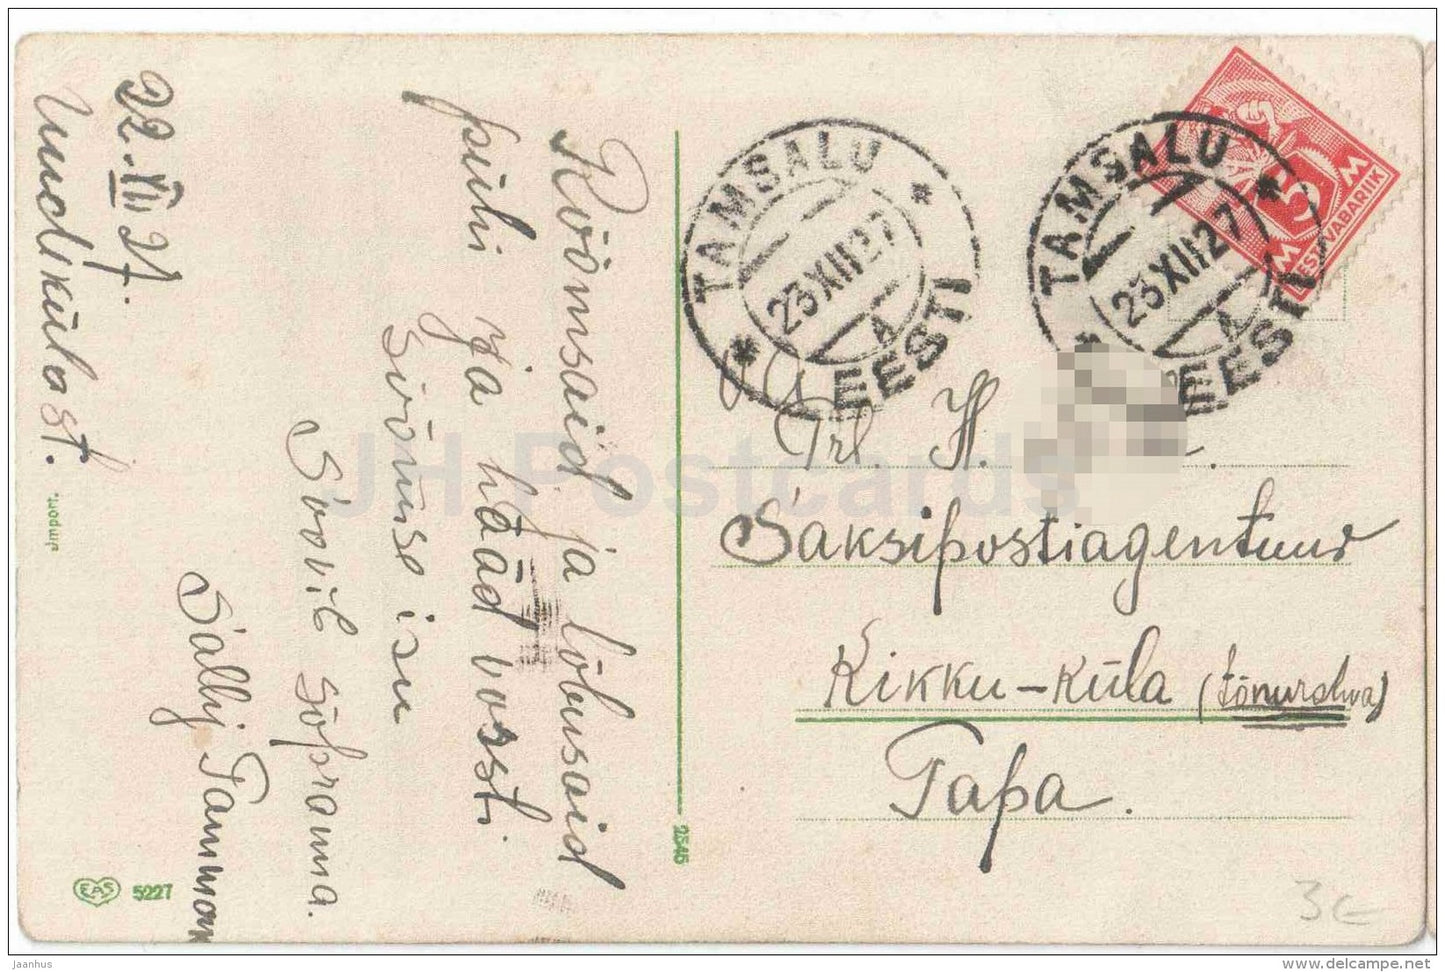 christmas greeting card - old car - Santa Claus - EAS 5227 - circulated in Estonia Tamsalu 1927 - JH Postcards